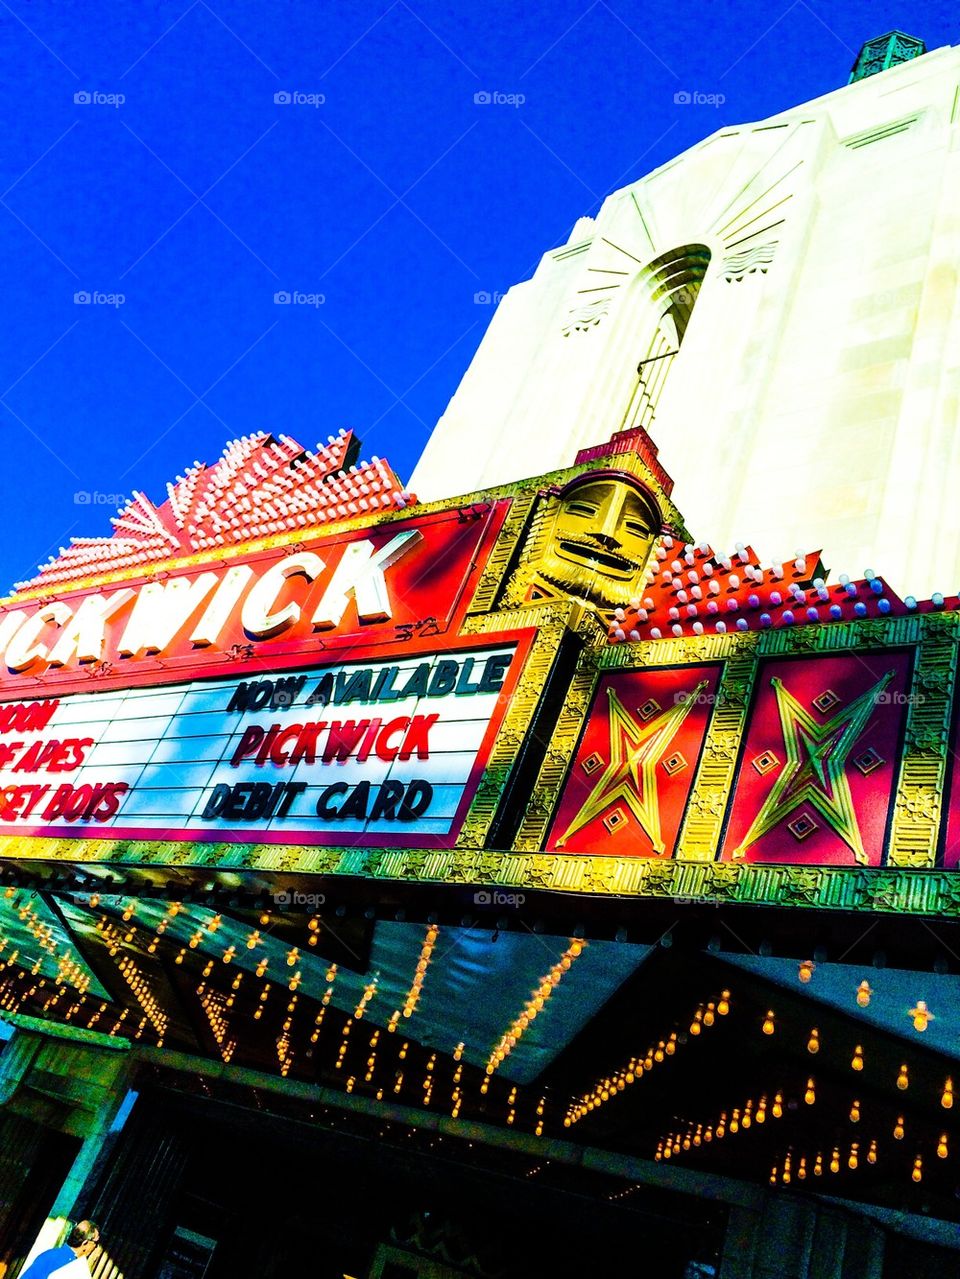 Pickwick movie theater